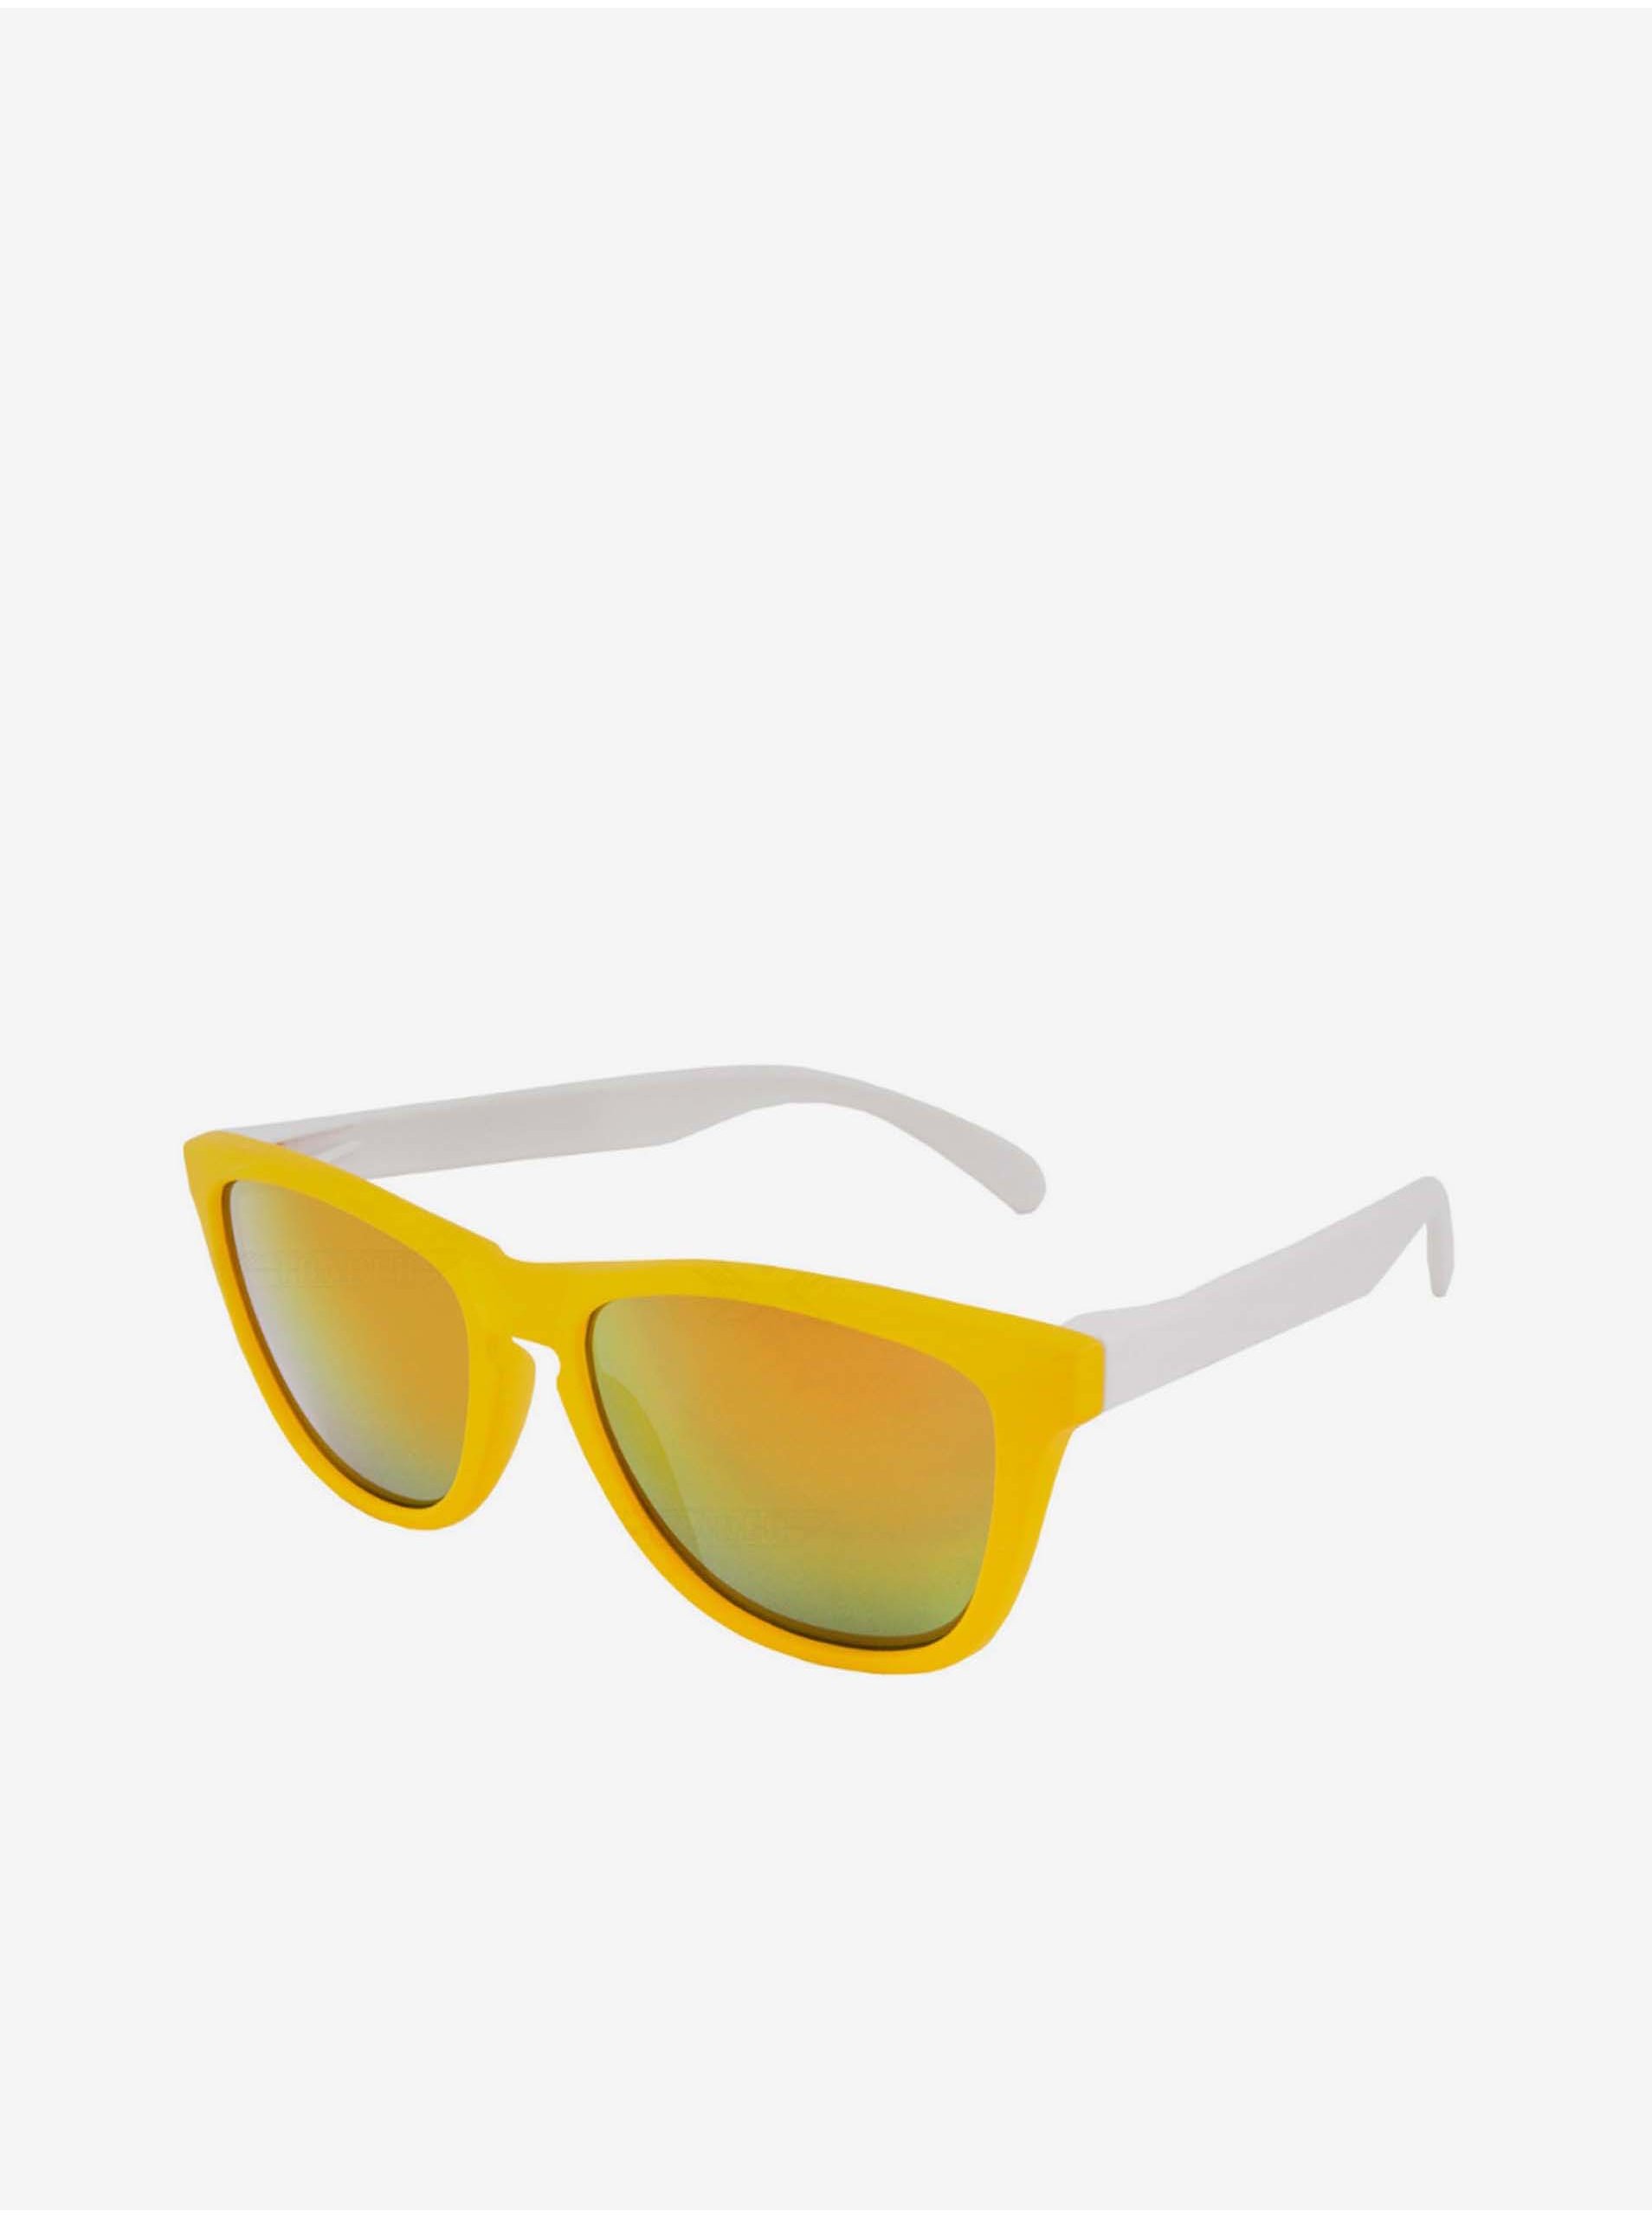 Lacno VeyRey slnečné okuliare Nerd Cool žlto-biele